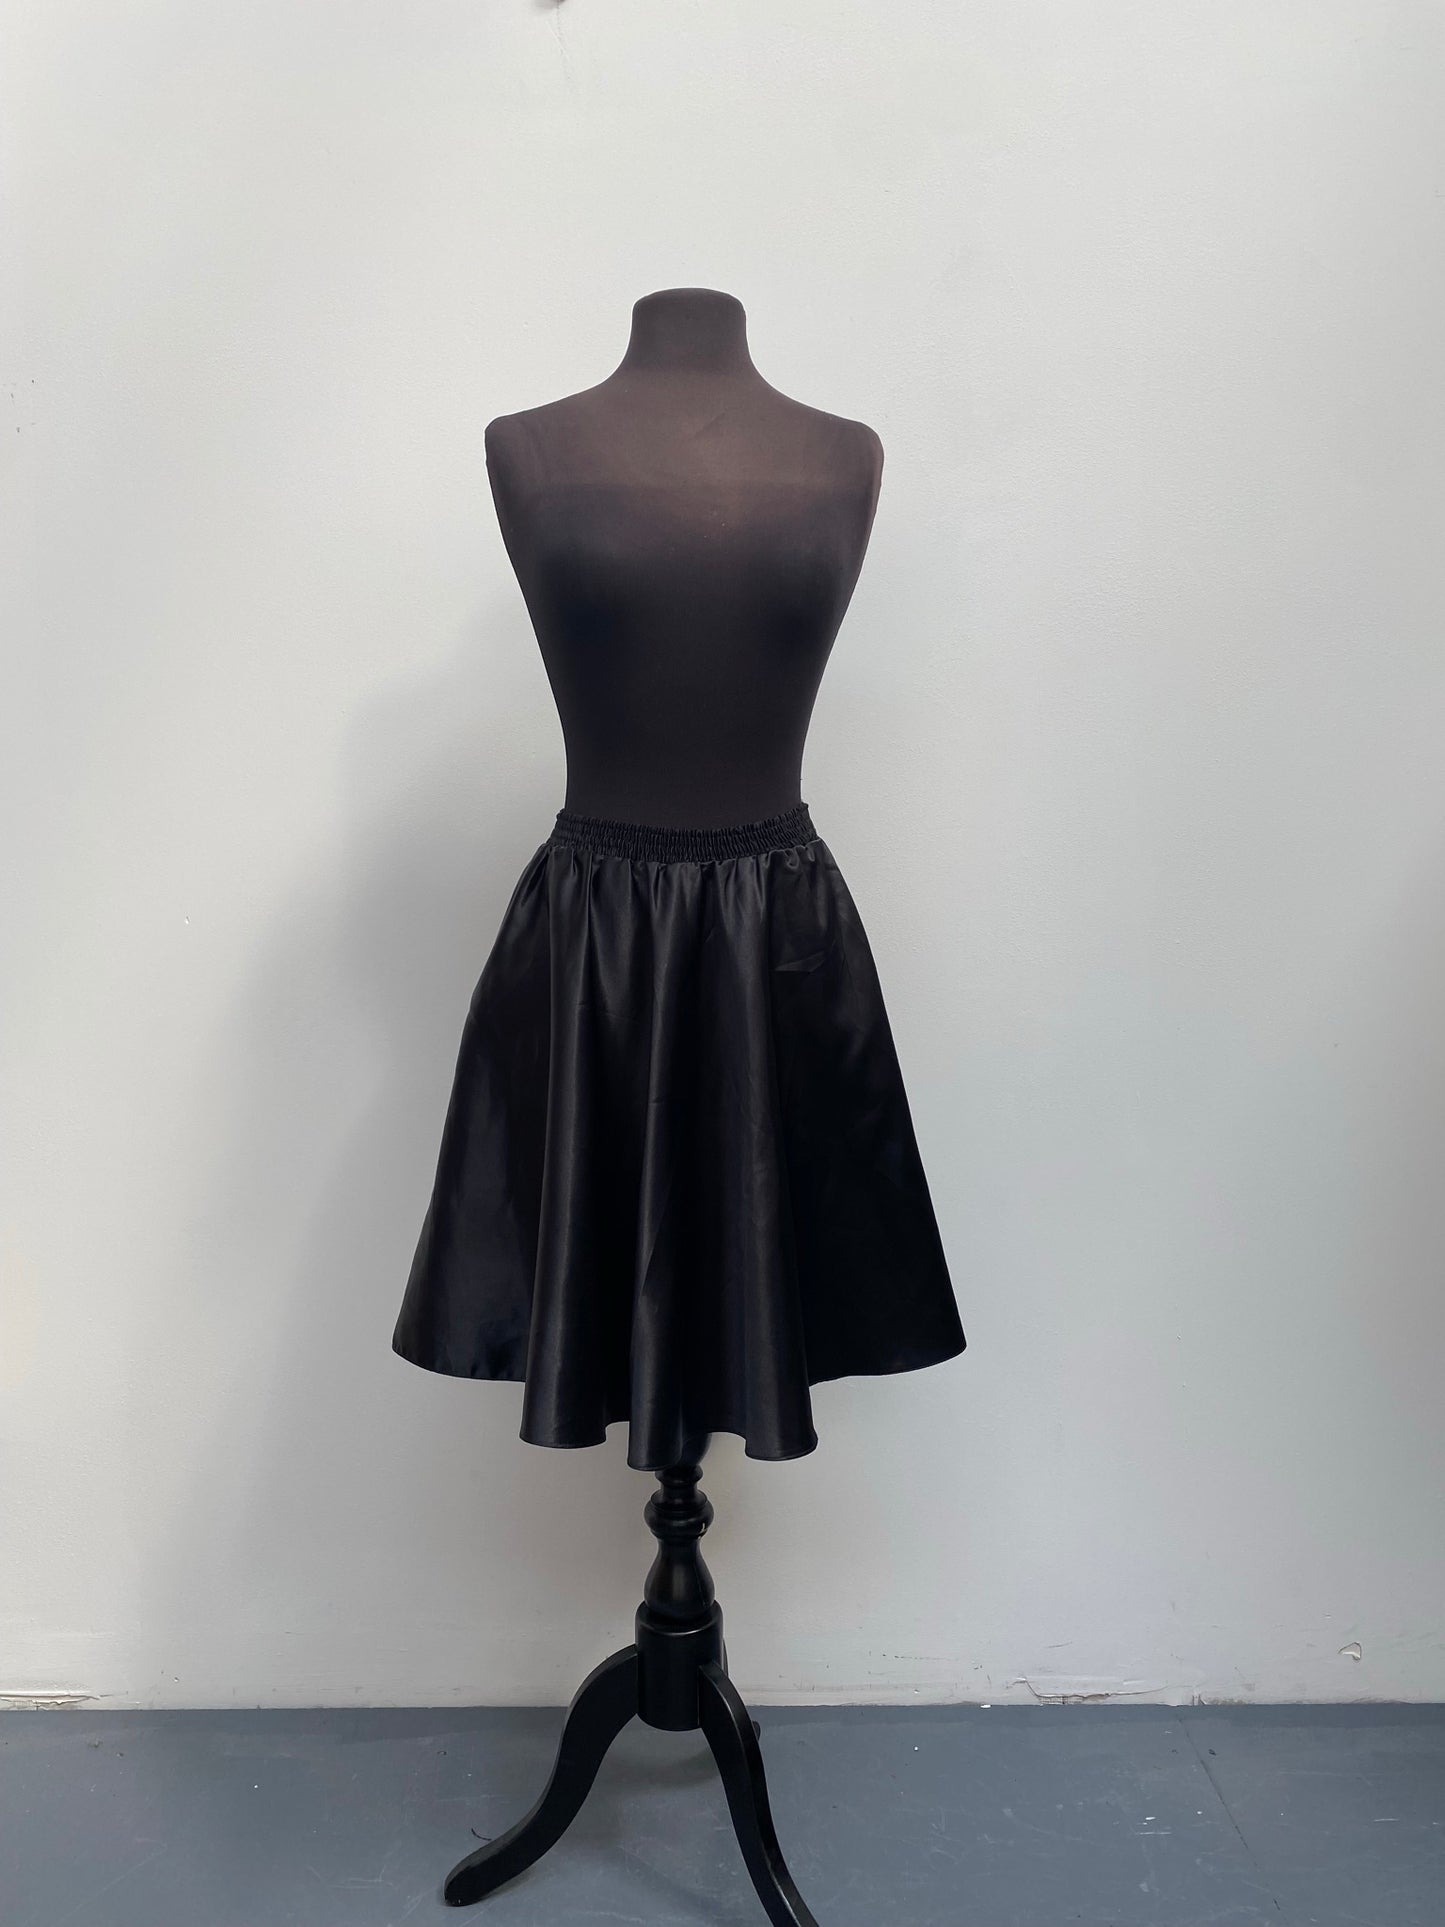 1950s Black Satin Skirt Size 8-10 - Ex Hire Fancy Dress Costume